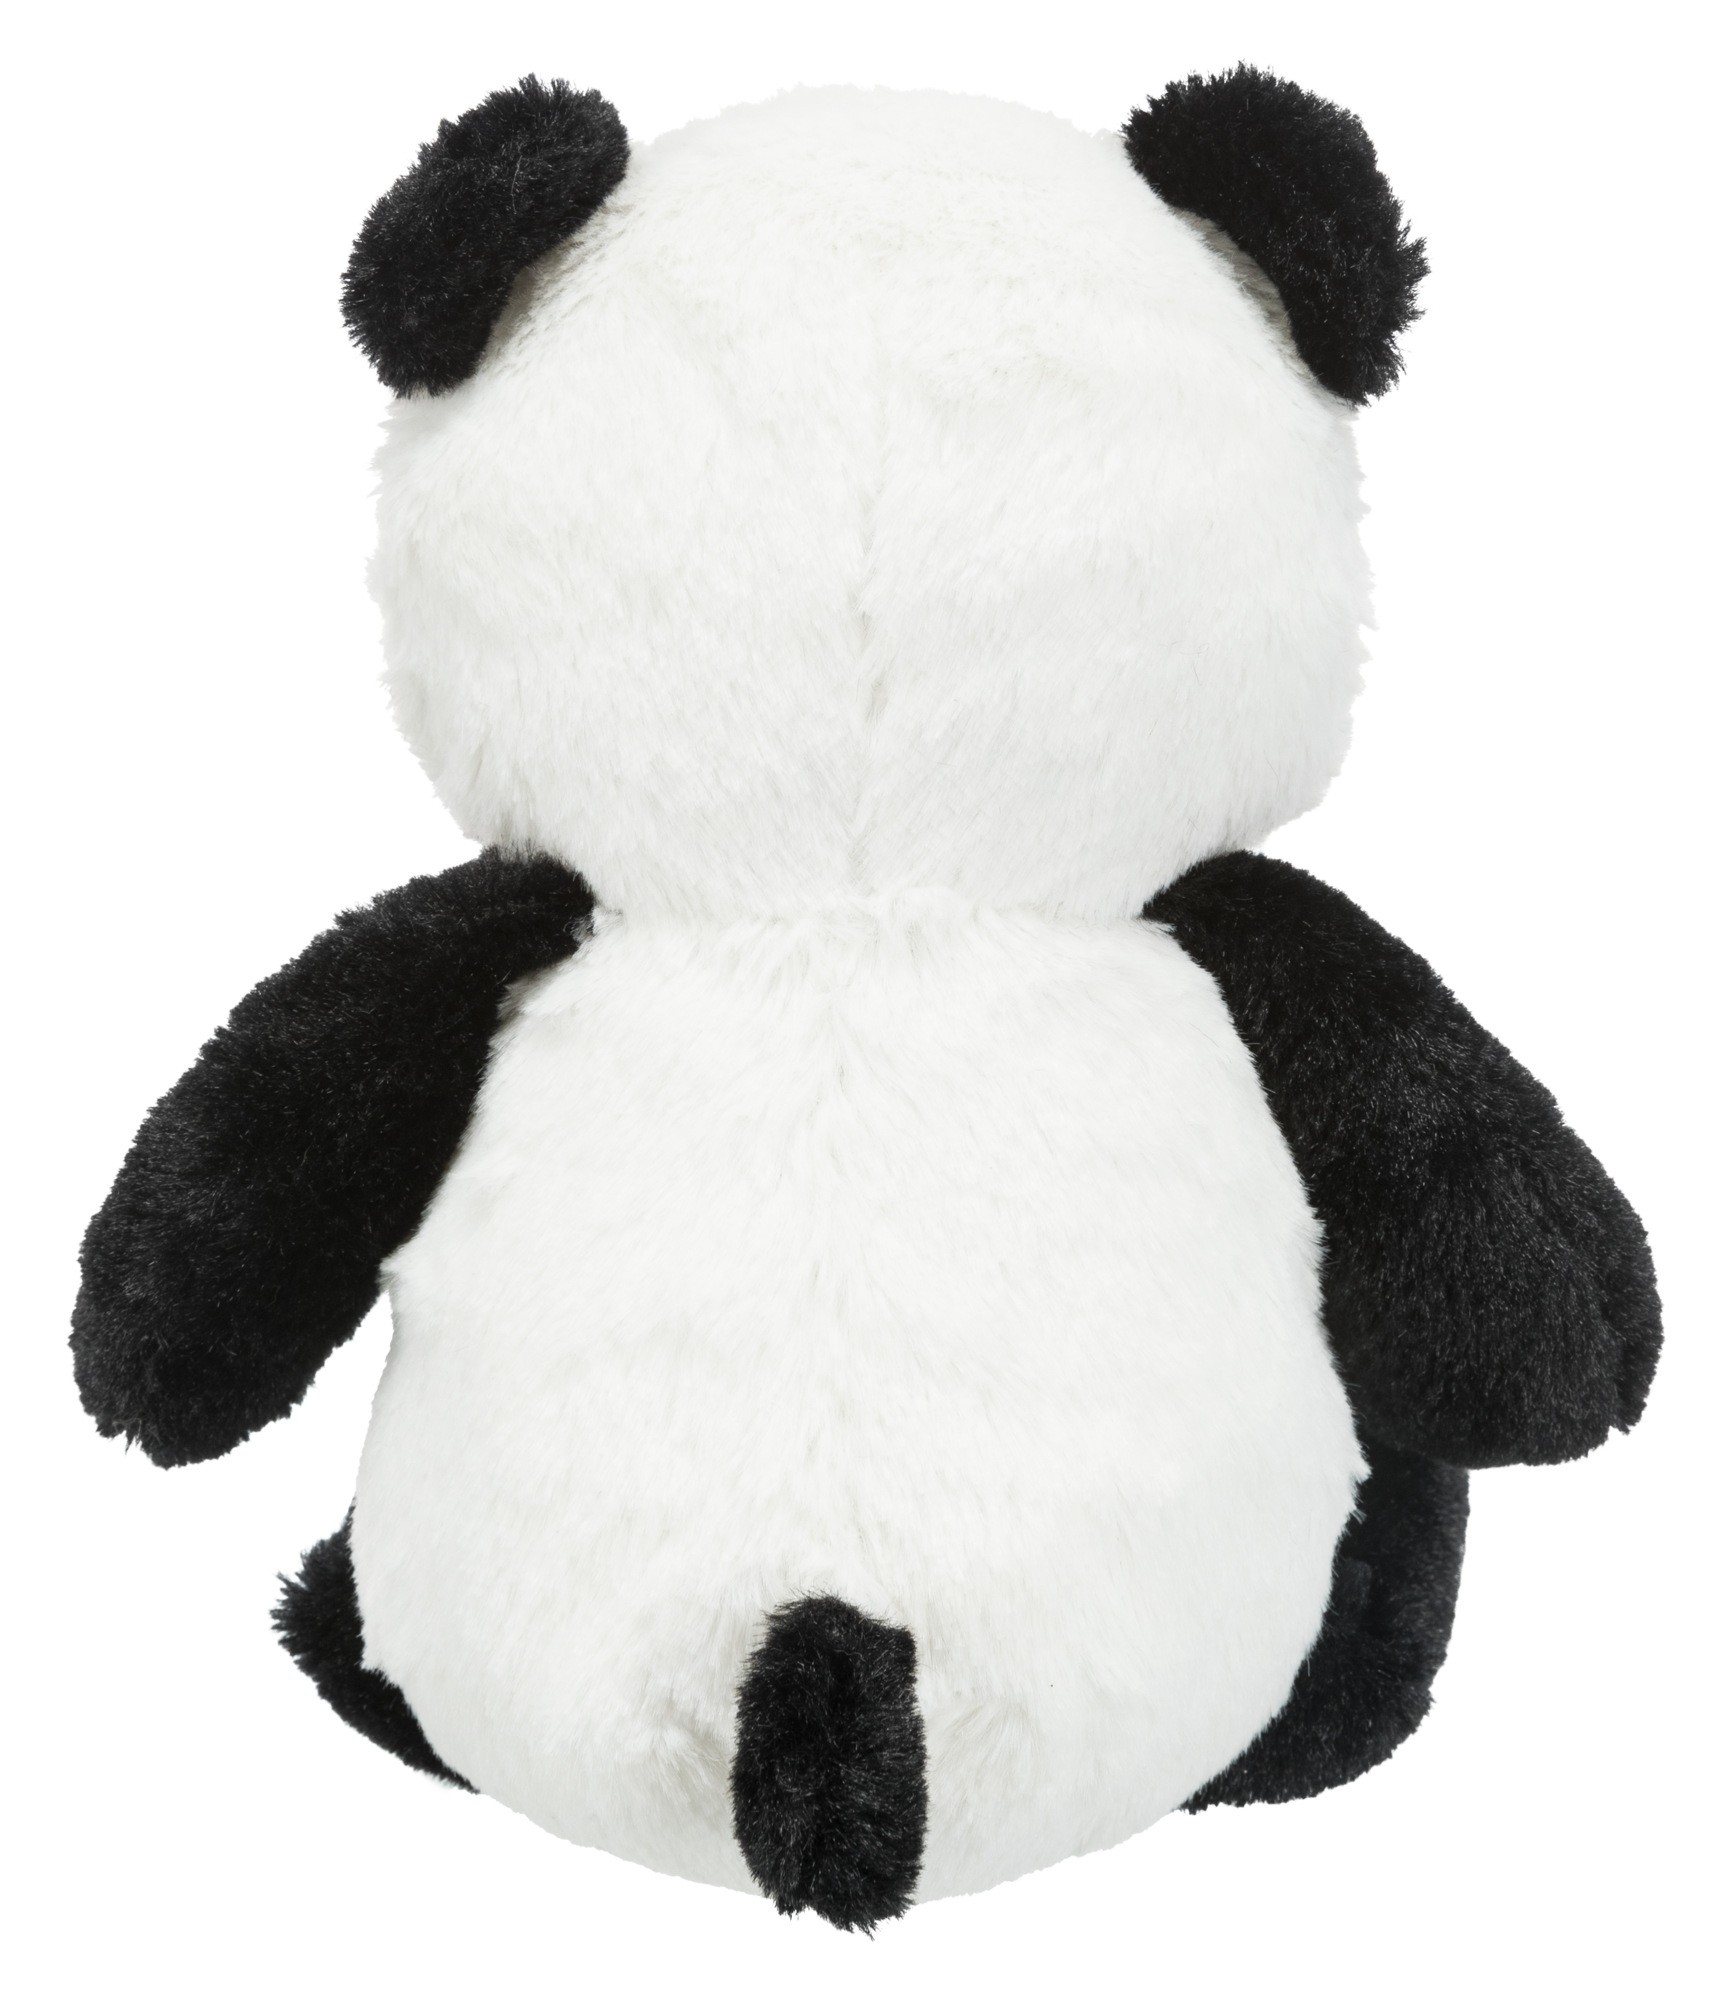 Plüschtier Panda